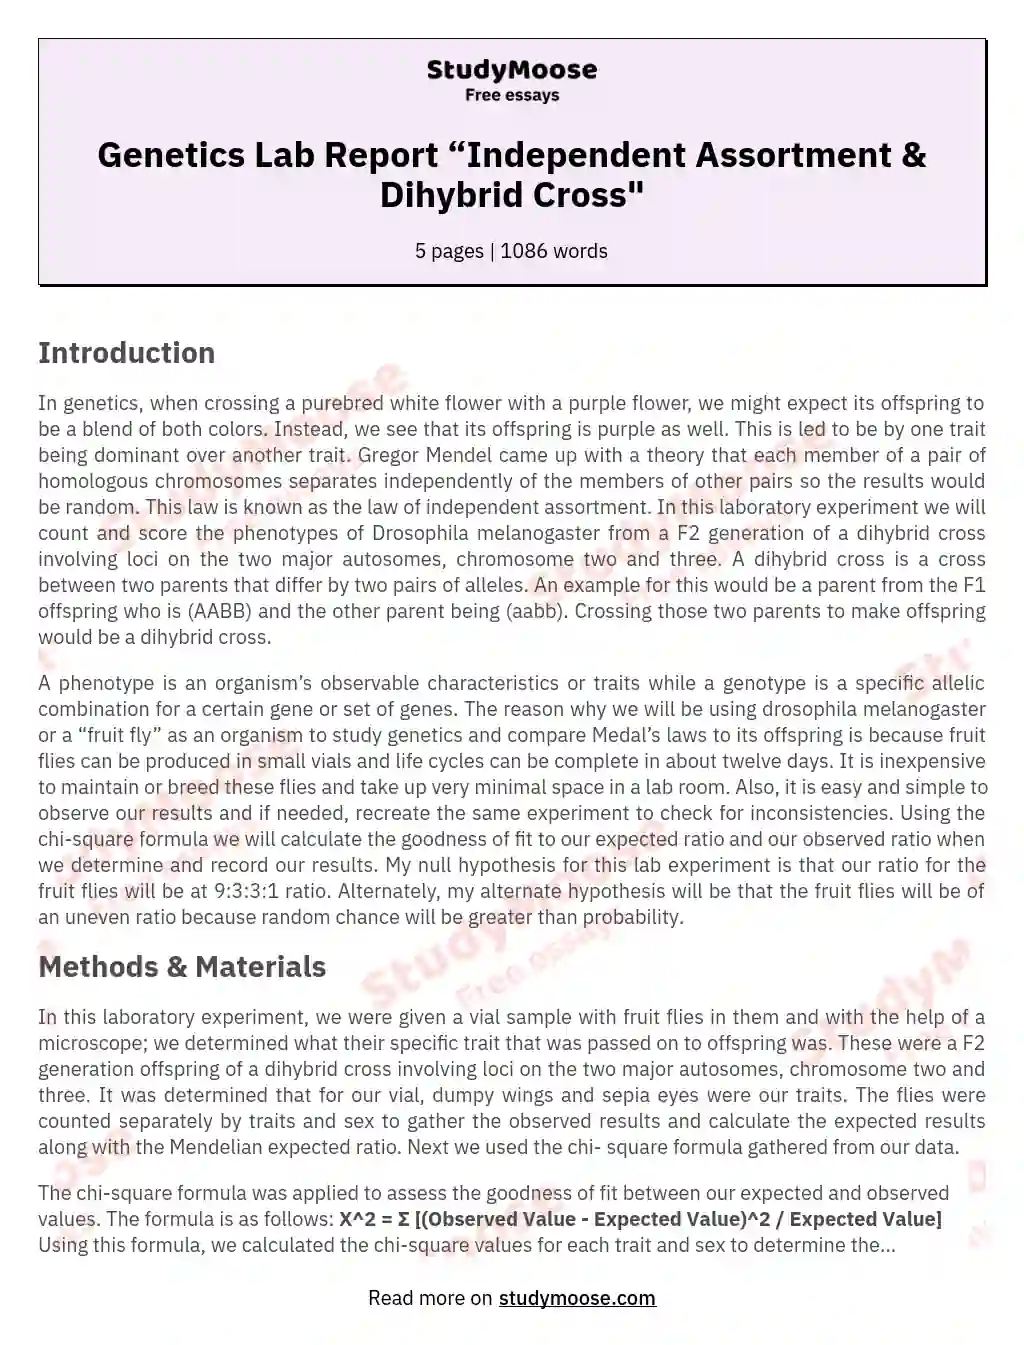 Genetics Lab Report “Independent Assortment & Dihybrid Cross" essay